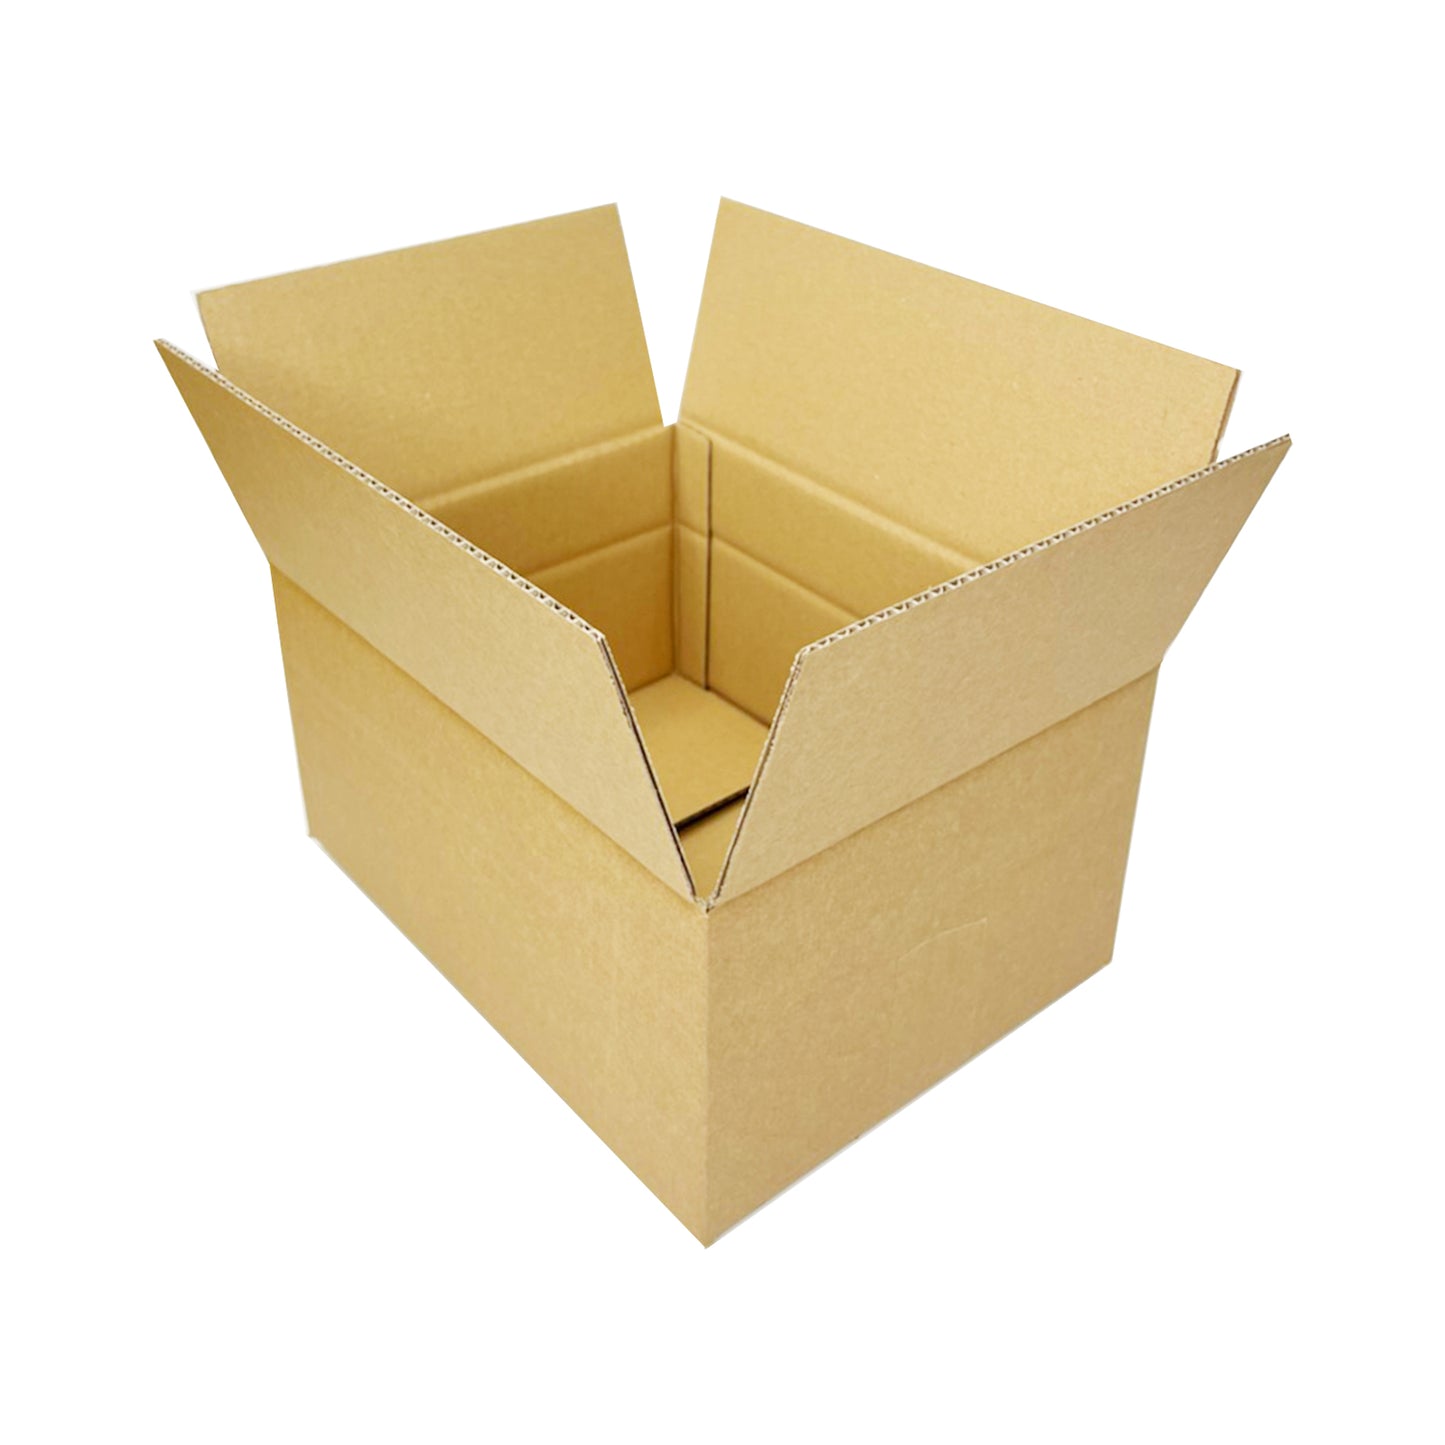 12x9x6" Heavy Duty Single Wall Cardboard Boxes (SW2)